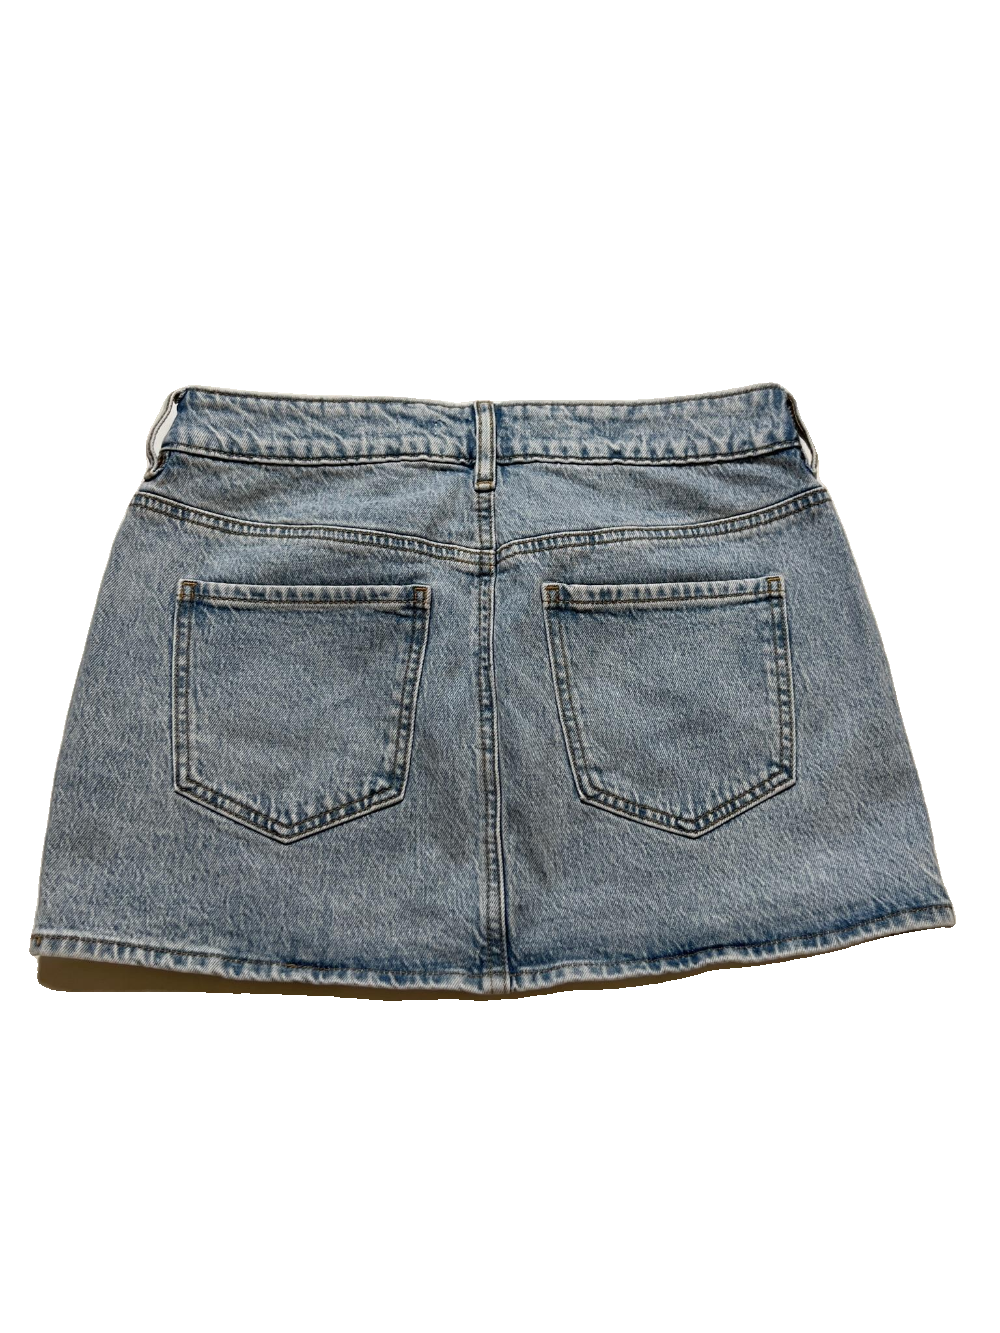 Pacsun- Denim Mini Skirt